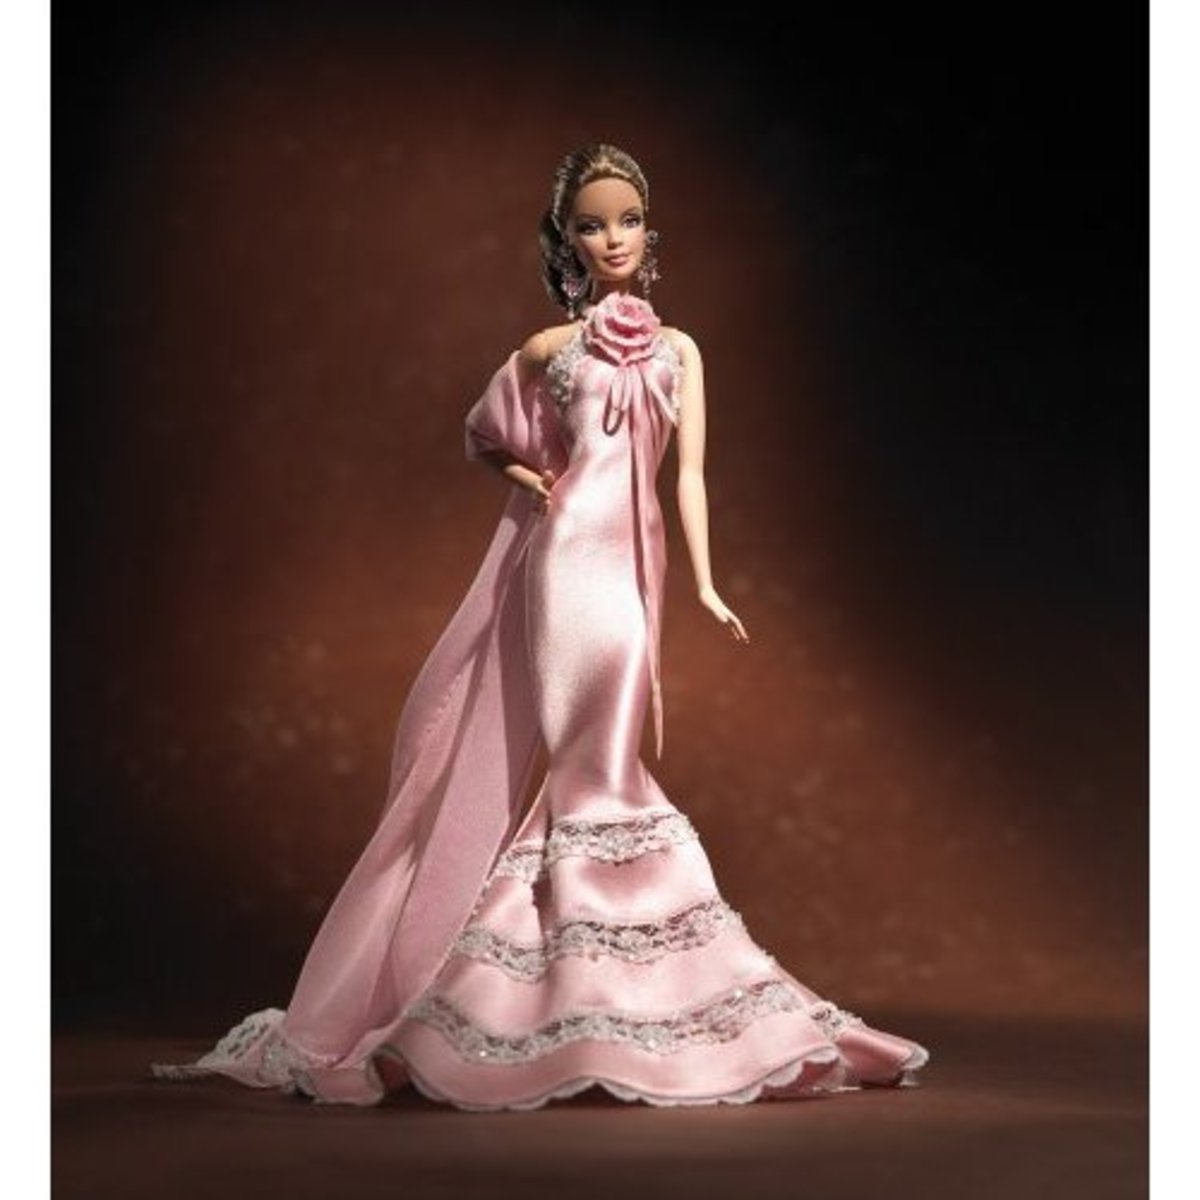 Barbie - photo courtesy of Amazon.com